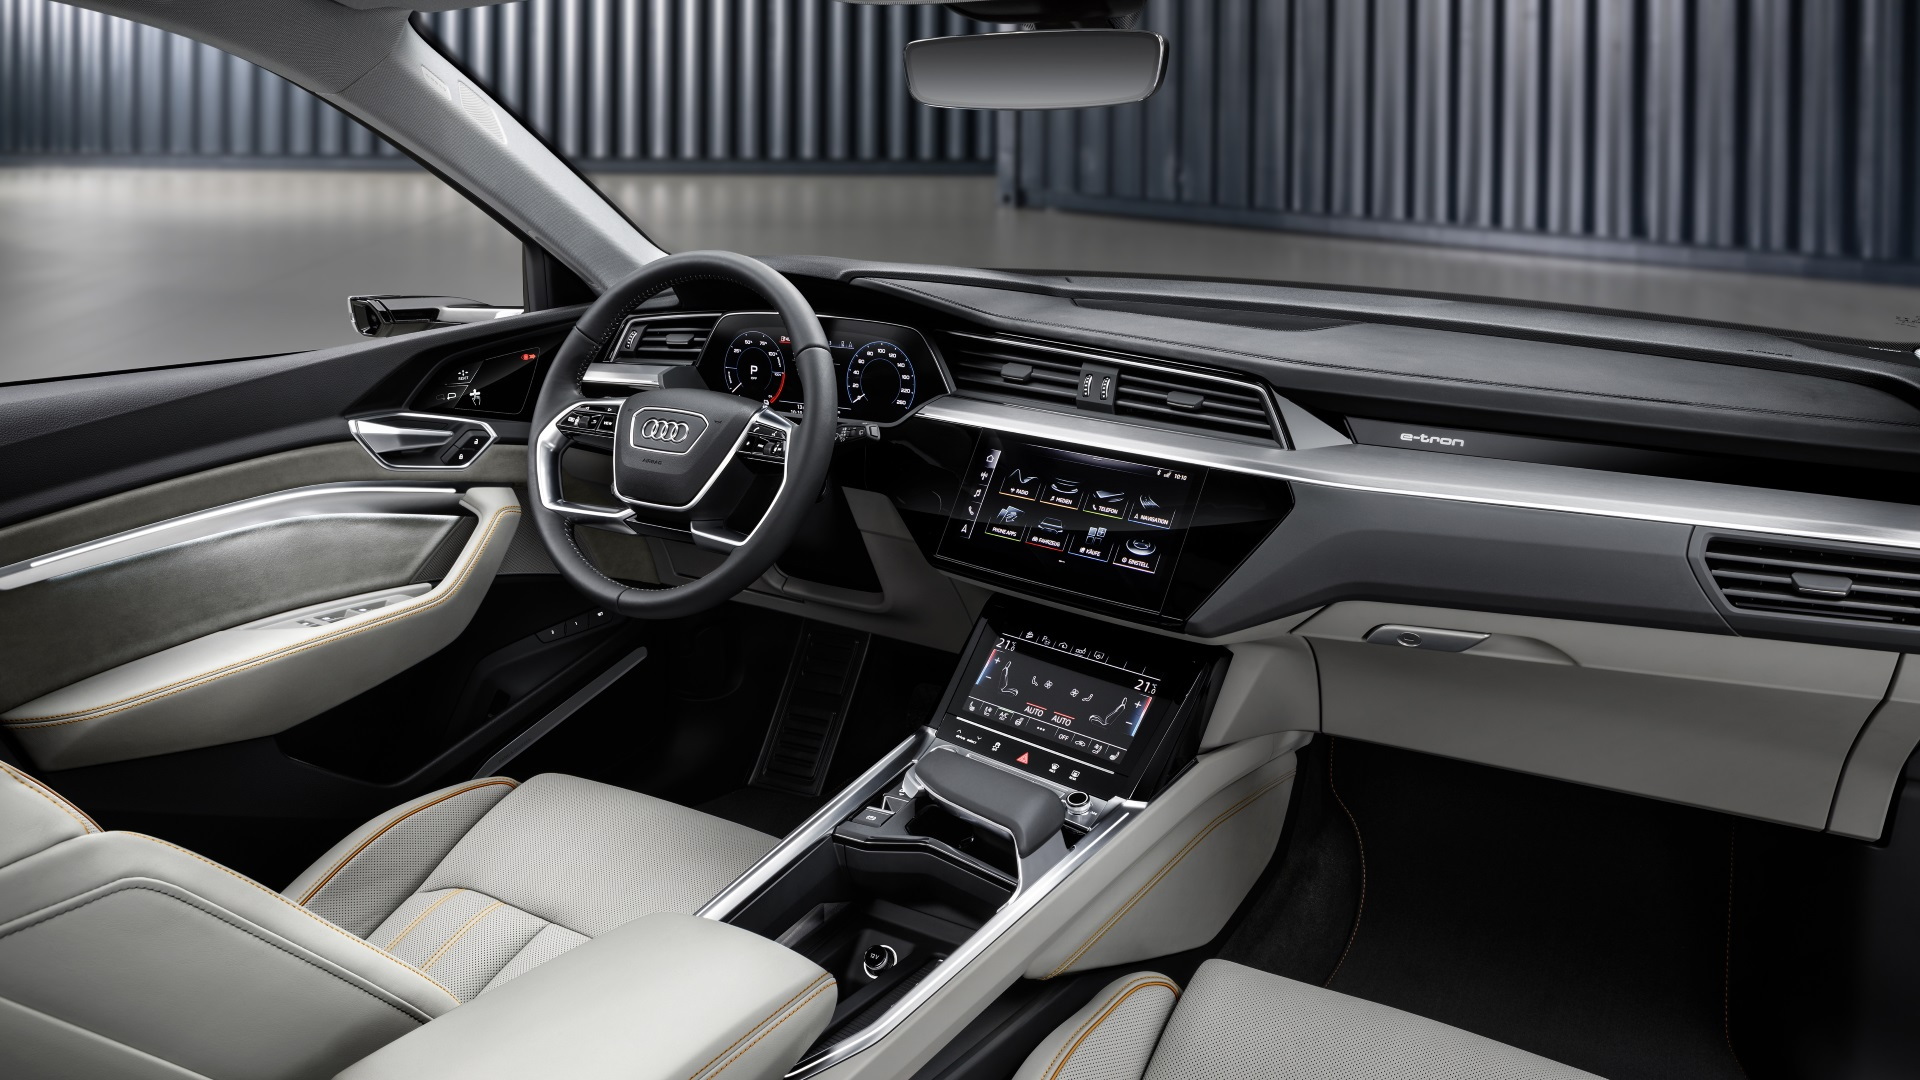 2019 Audi e-tron quattro, in European trim, at San Francisco launch event